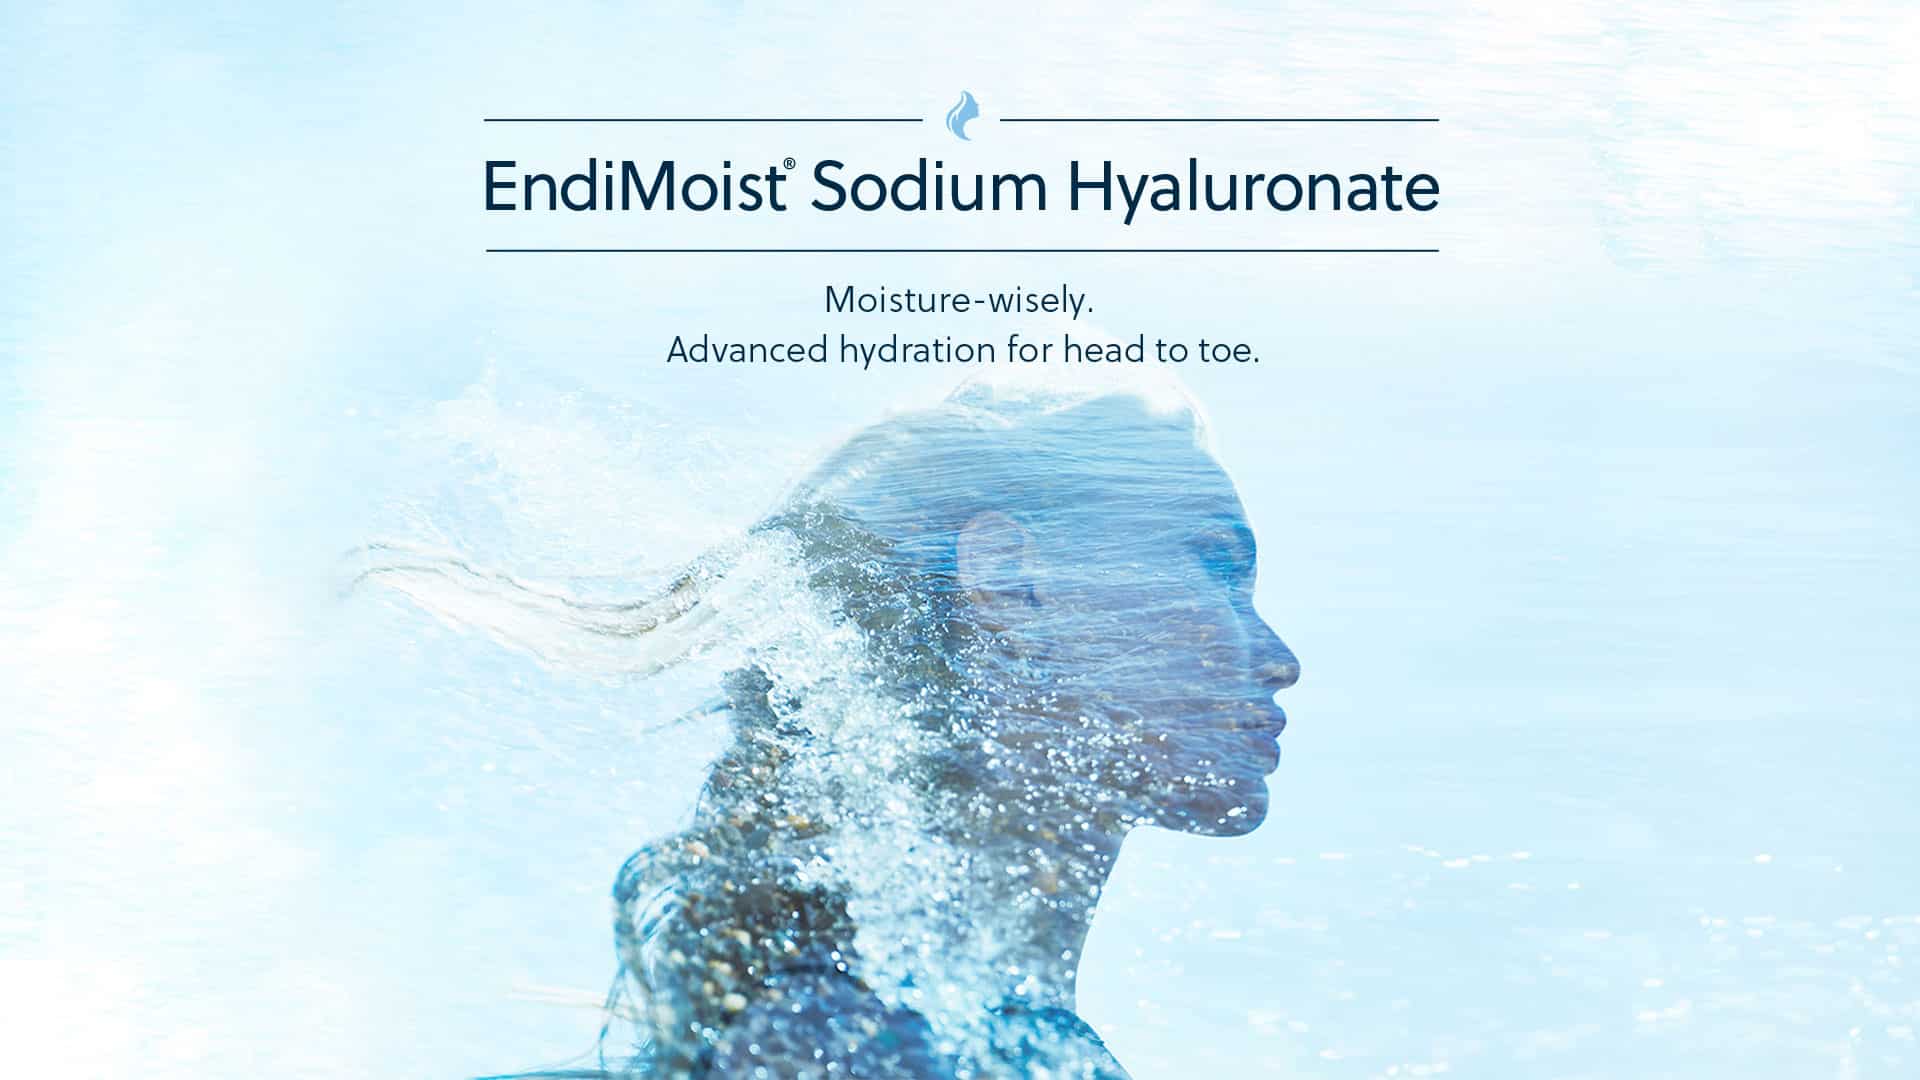 Endimoist Sodium Hyaluronate